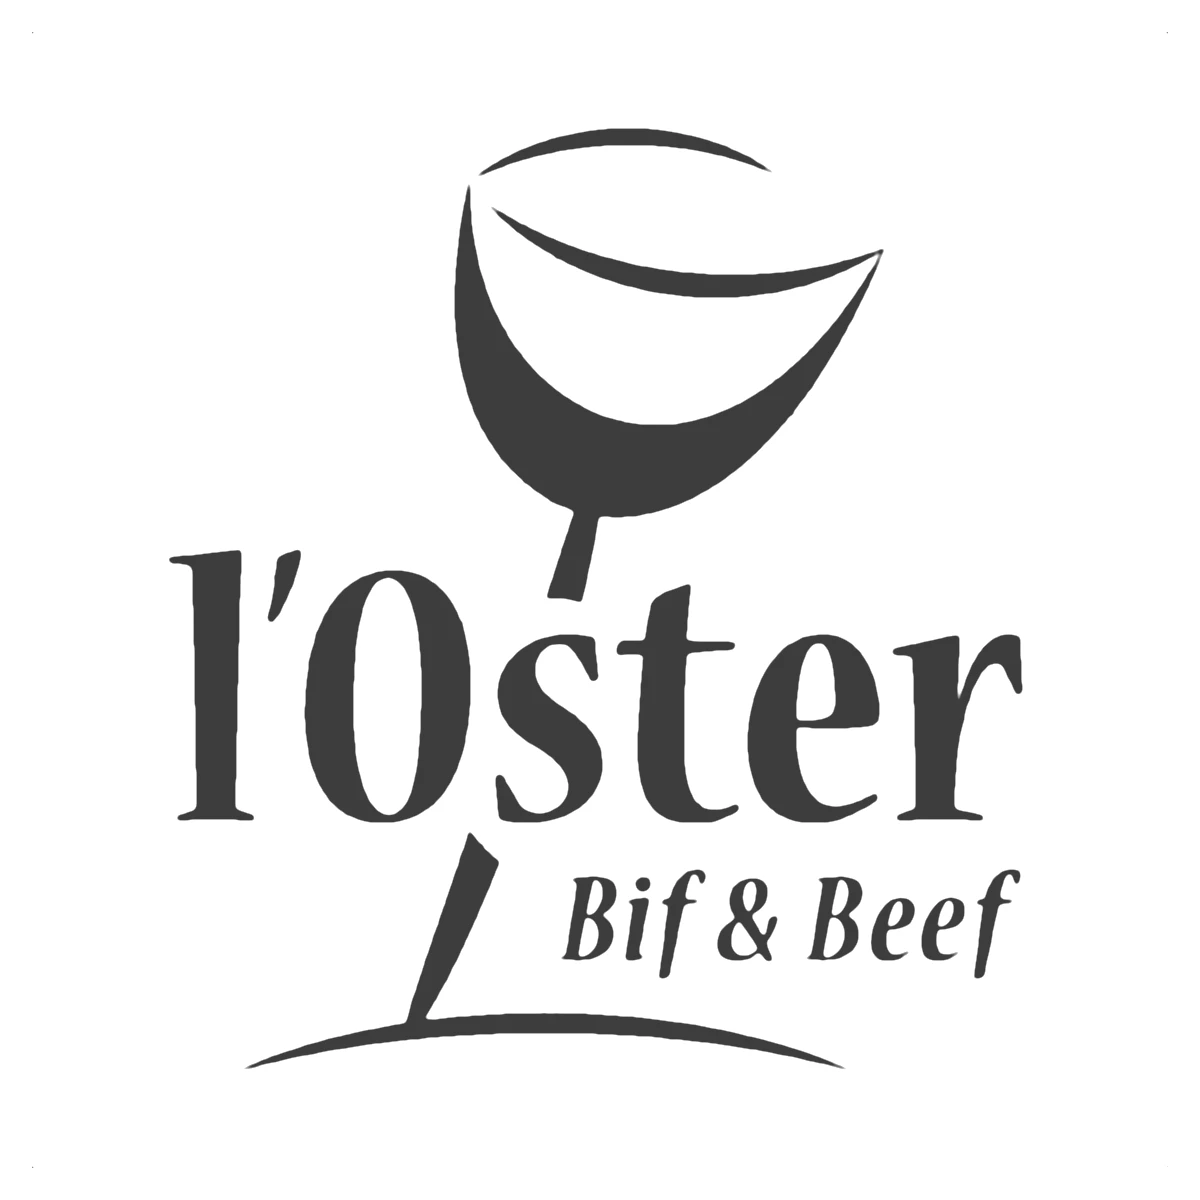 Ristorante l'Oster Bif & Beef